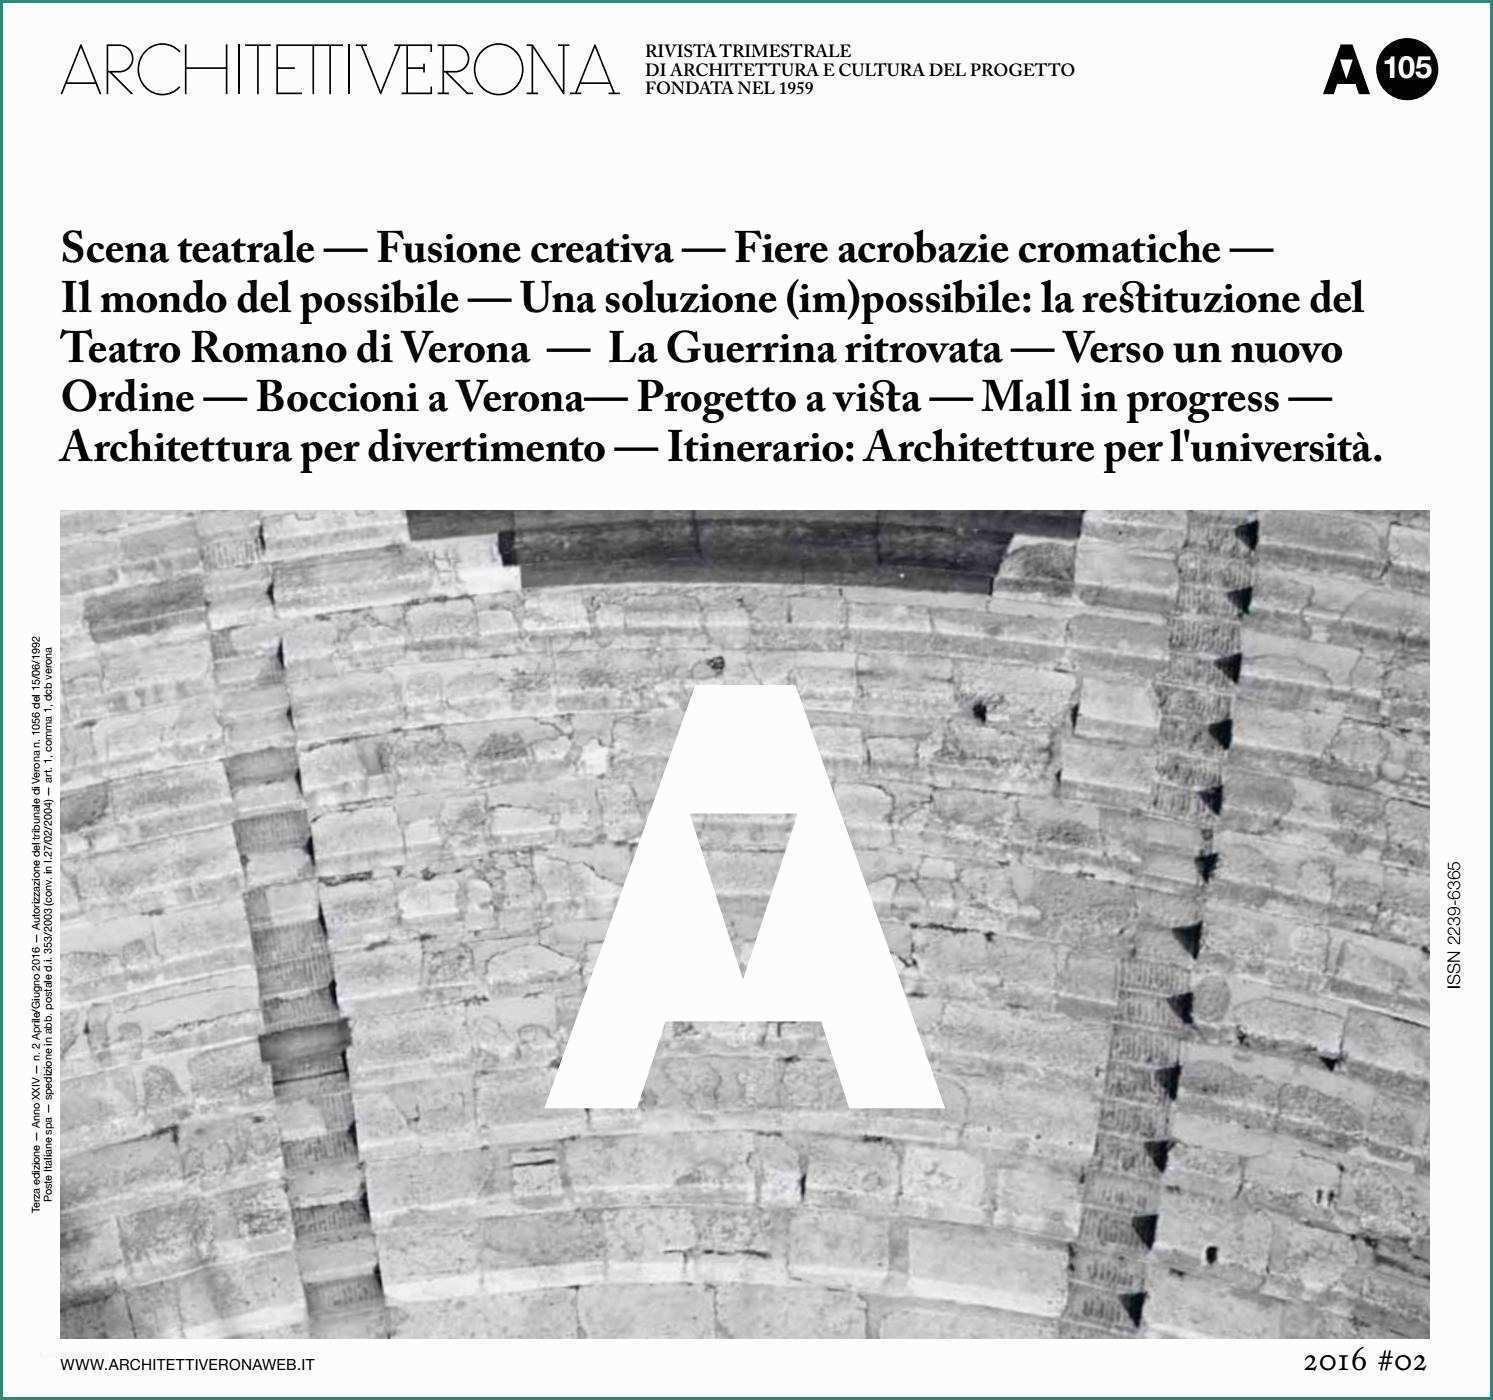 Pavimento sopraelevato Dwg E Architettiverona 105 by Architettiverona issuu